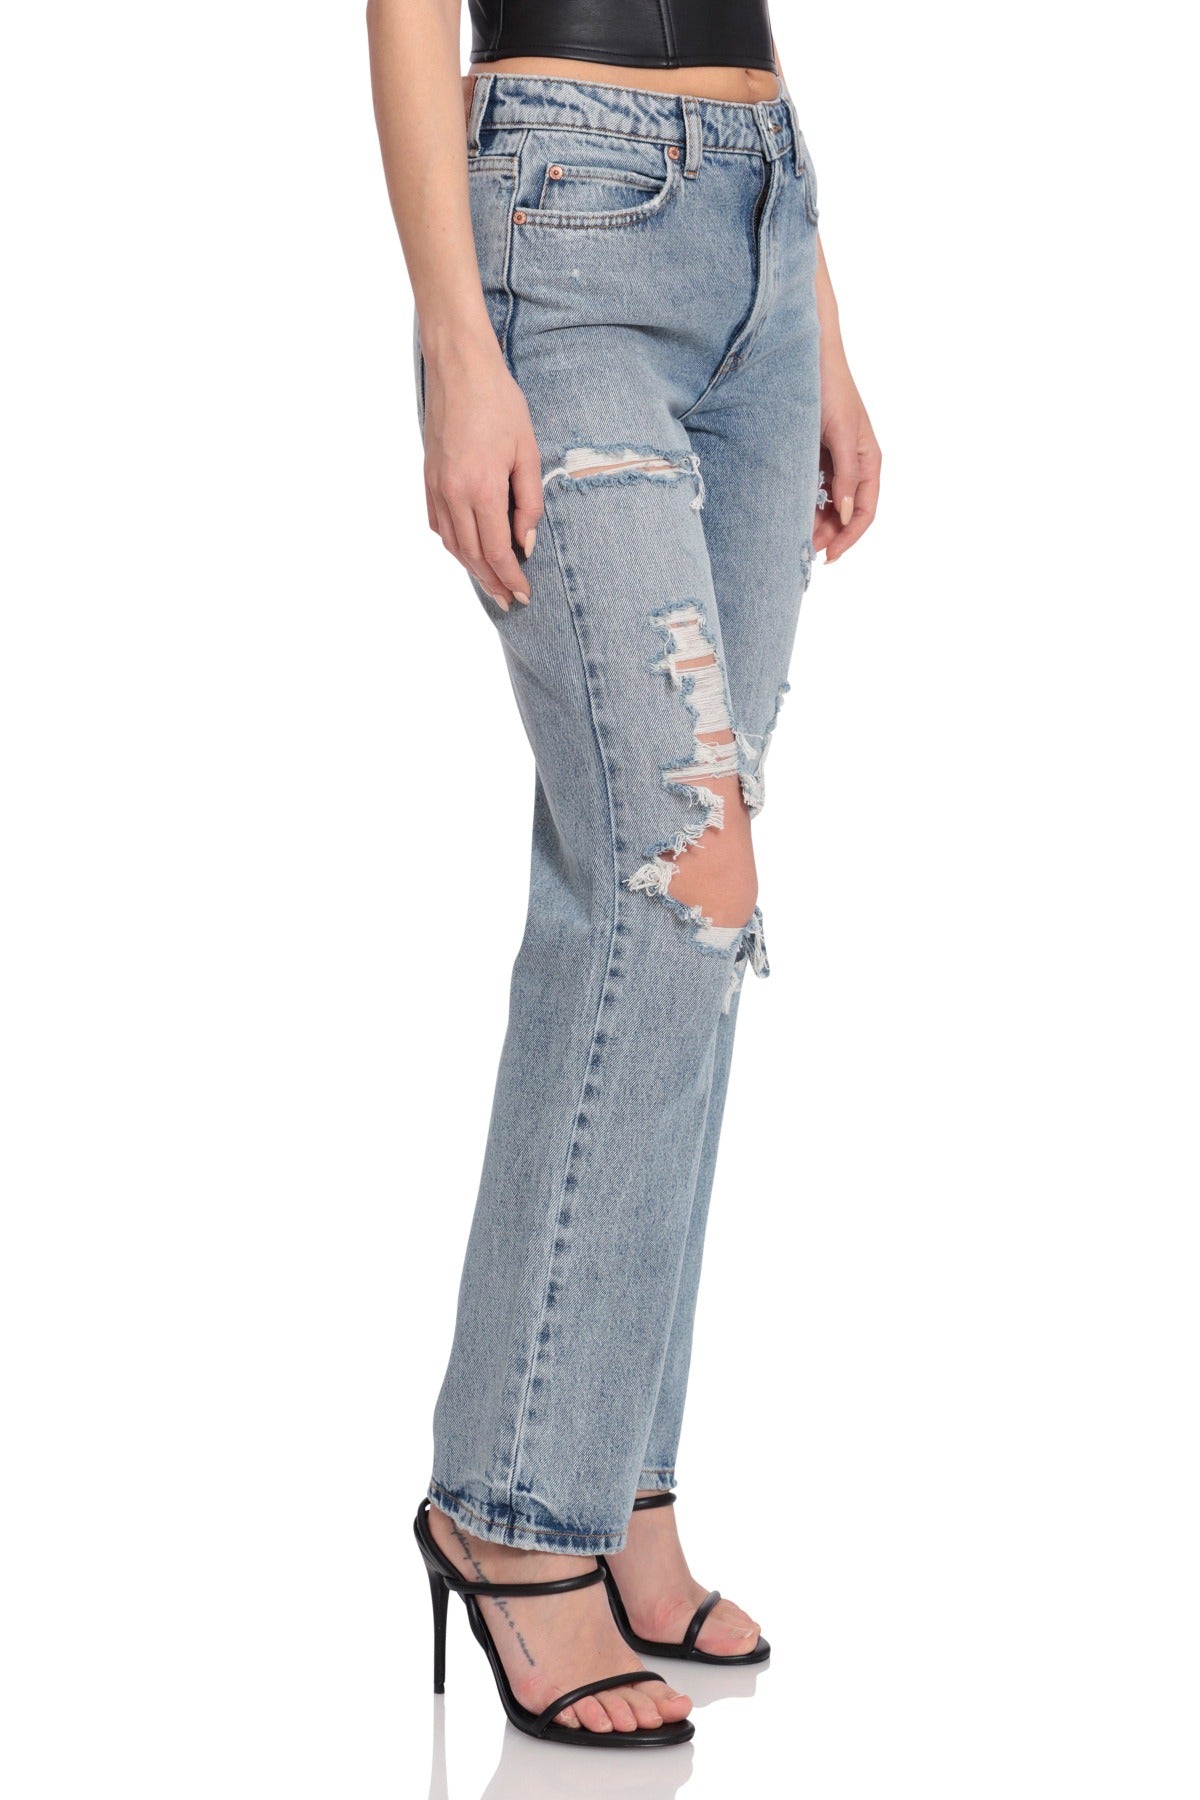 Aero Skinny Fit Jeans Women's Size 2 Short High Rise Stretch Distressed  Denim | eBay